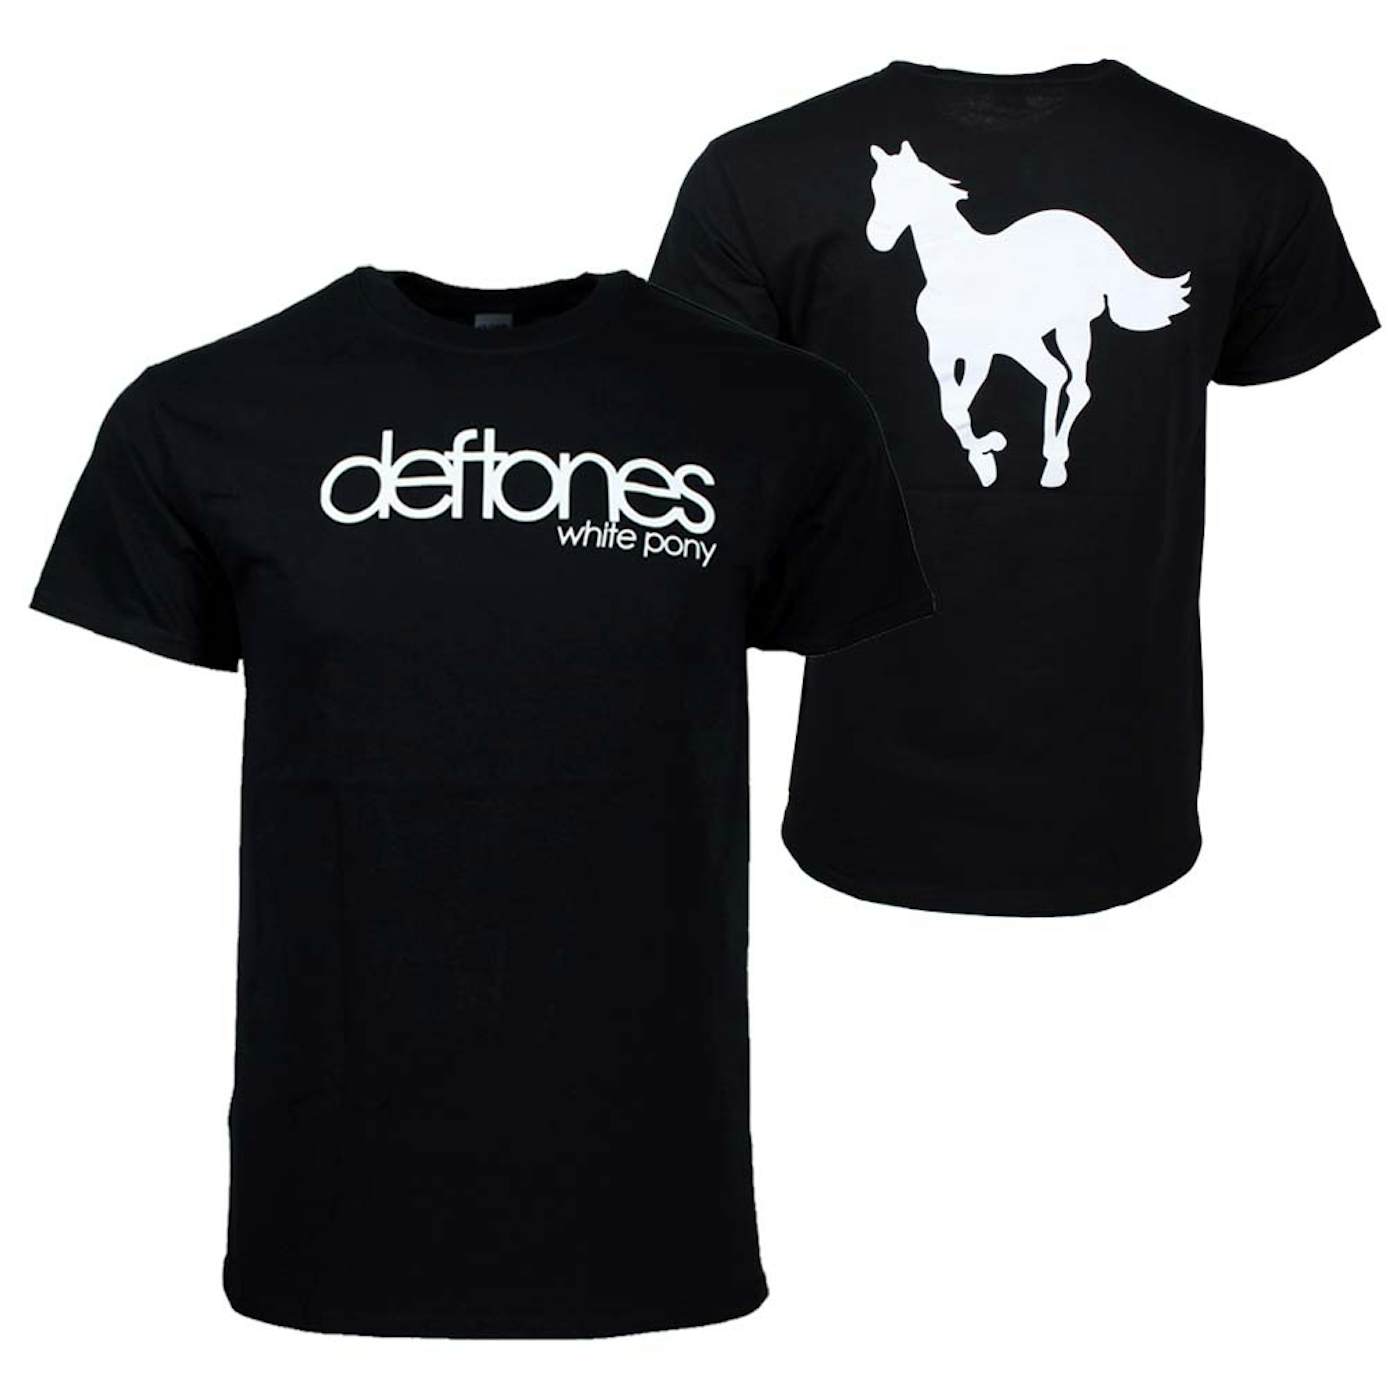 Deftones T Shirt  Deftones White Pony T-Shirt